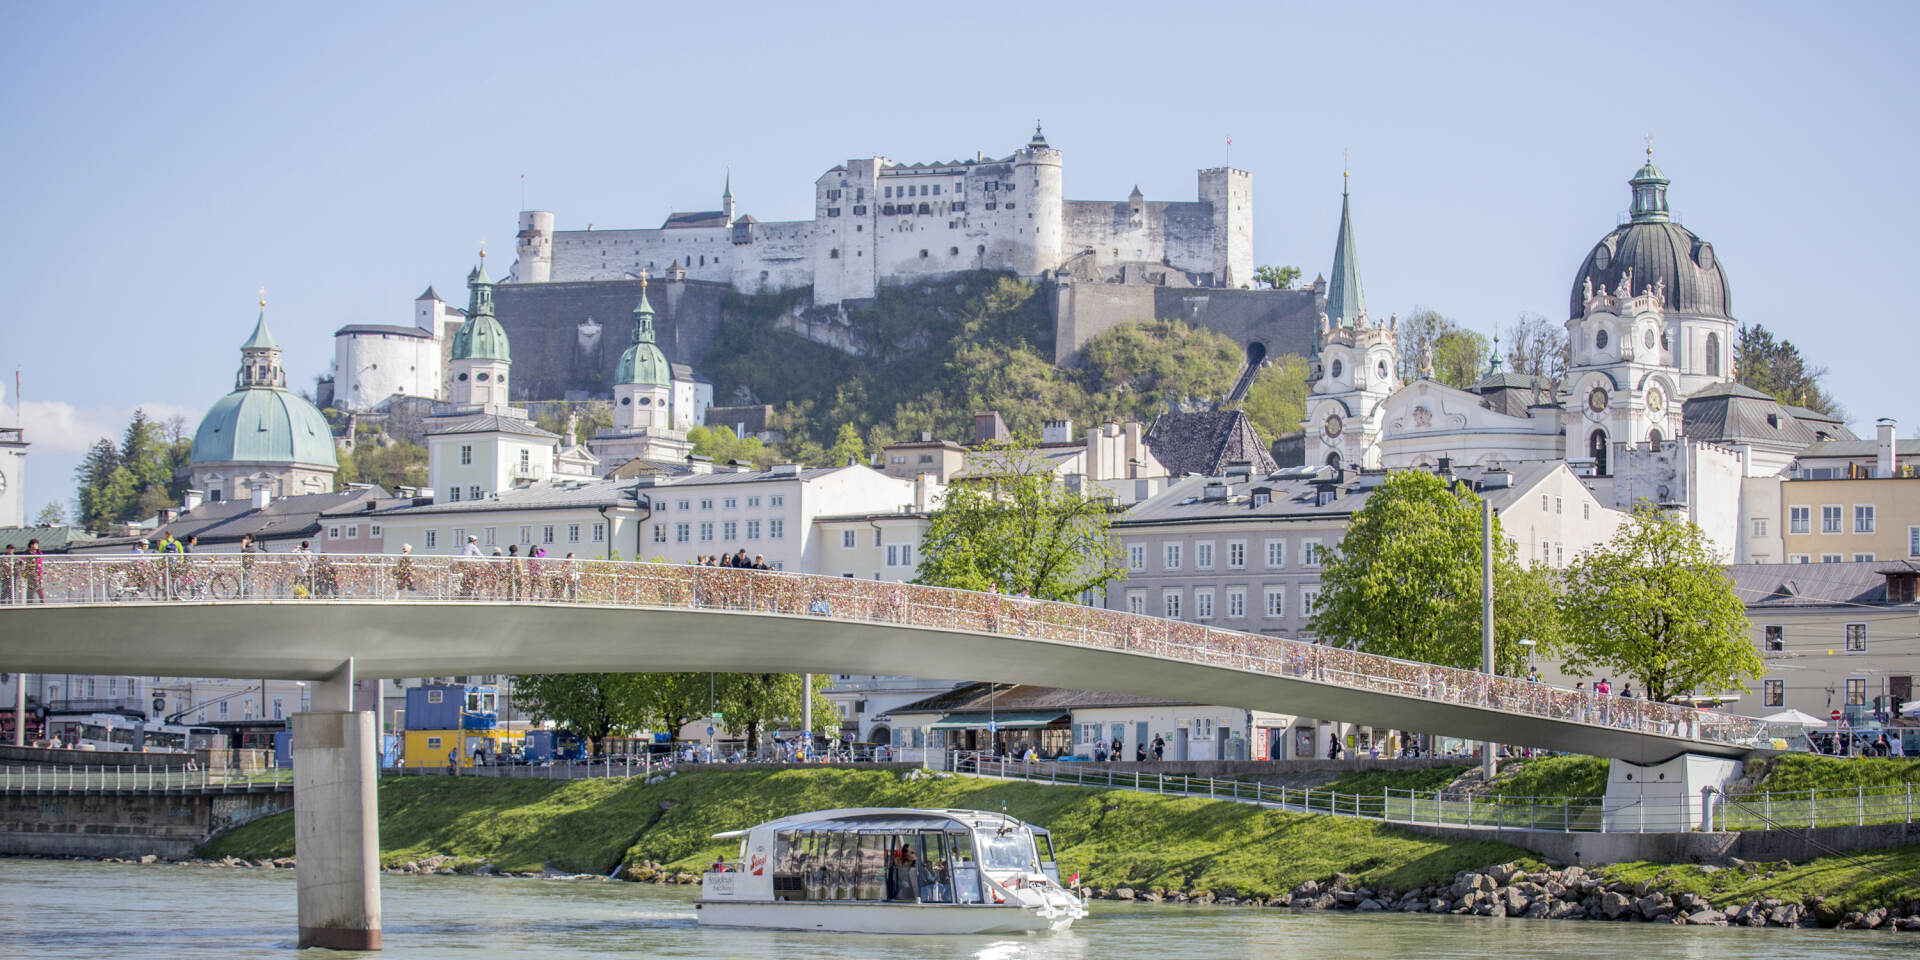 Salzburg Panorama City Tour by bus and boat - boat Amadeus © salzburghighlights.com